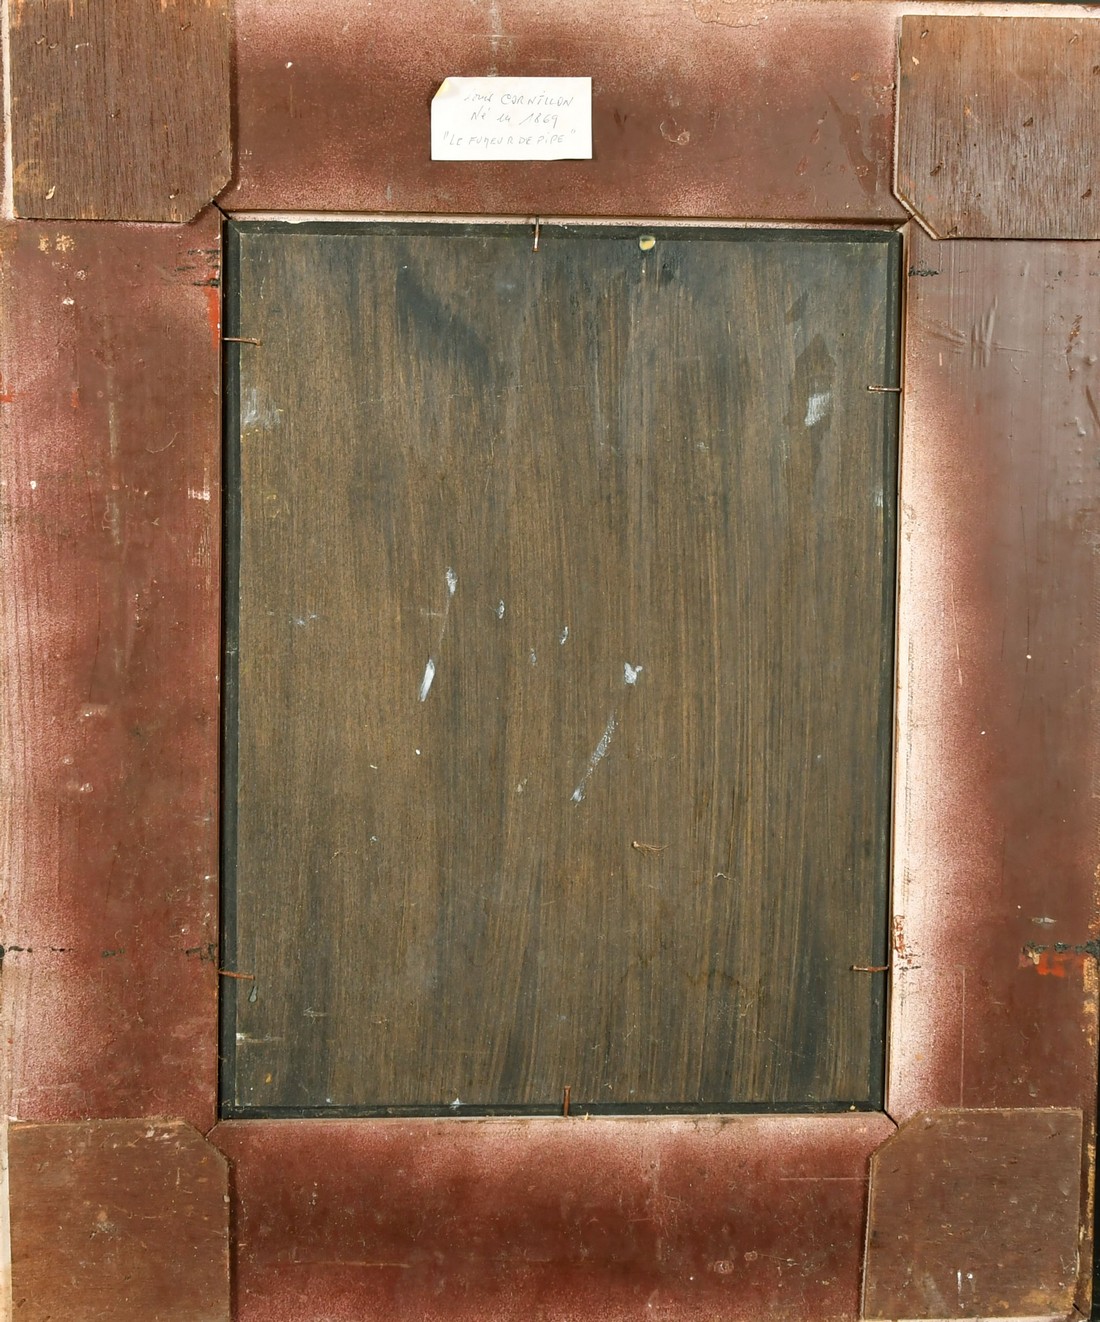 Cortillon, 20th Century, 'Le Fumeur de Pipe', oil on panel, signed, 15.75" x 11.75" (40 x 30cm). - Image 4 of 4